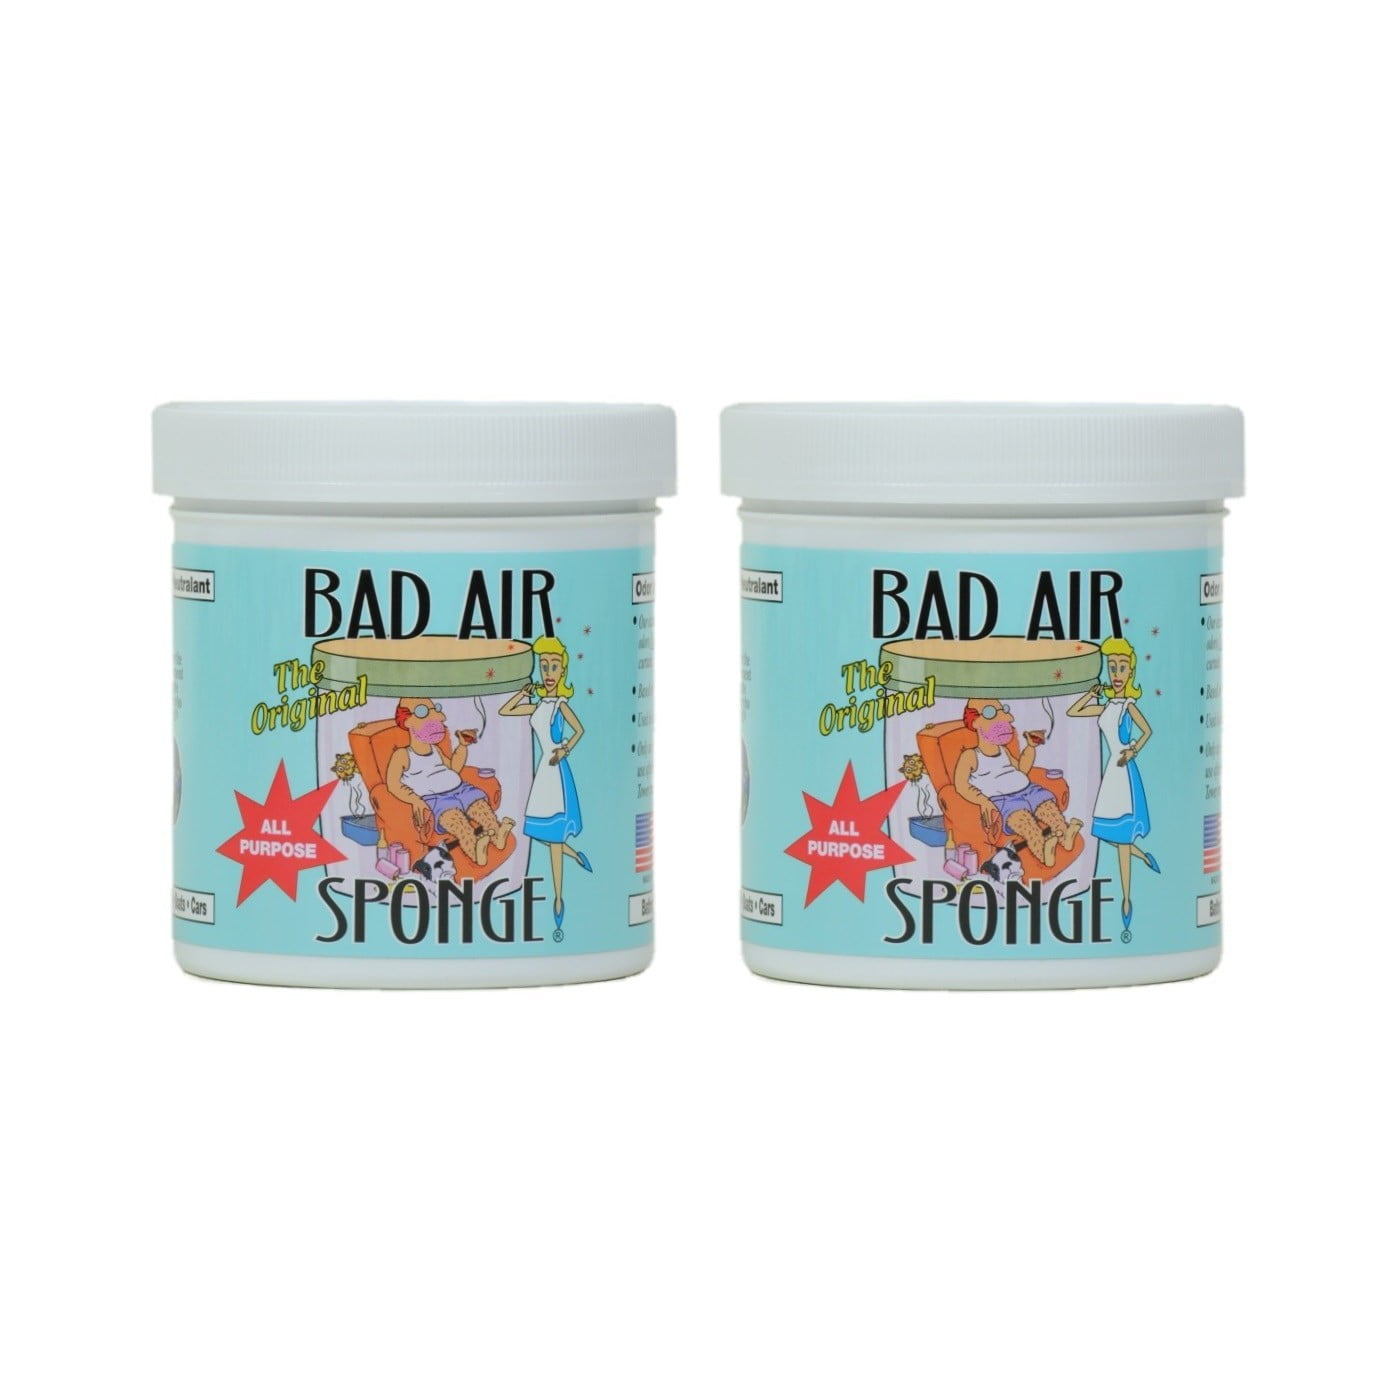 Bad Air Sponge 1lb. Air Odor Absorbant 12 Pack